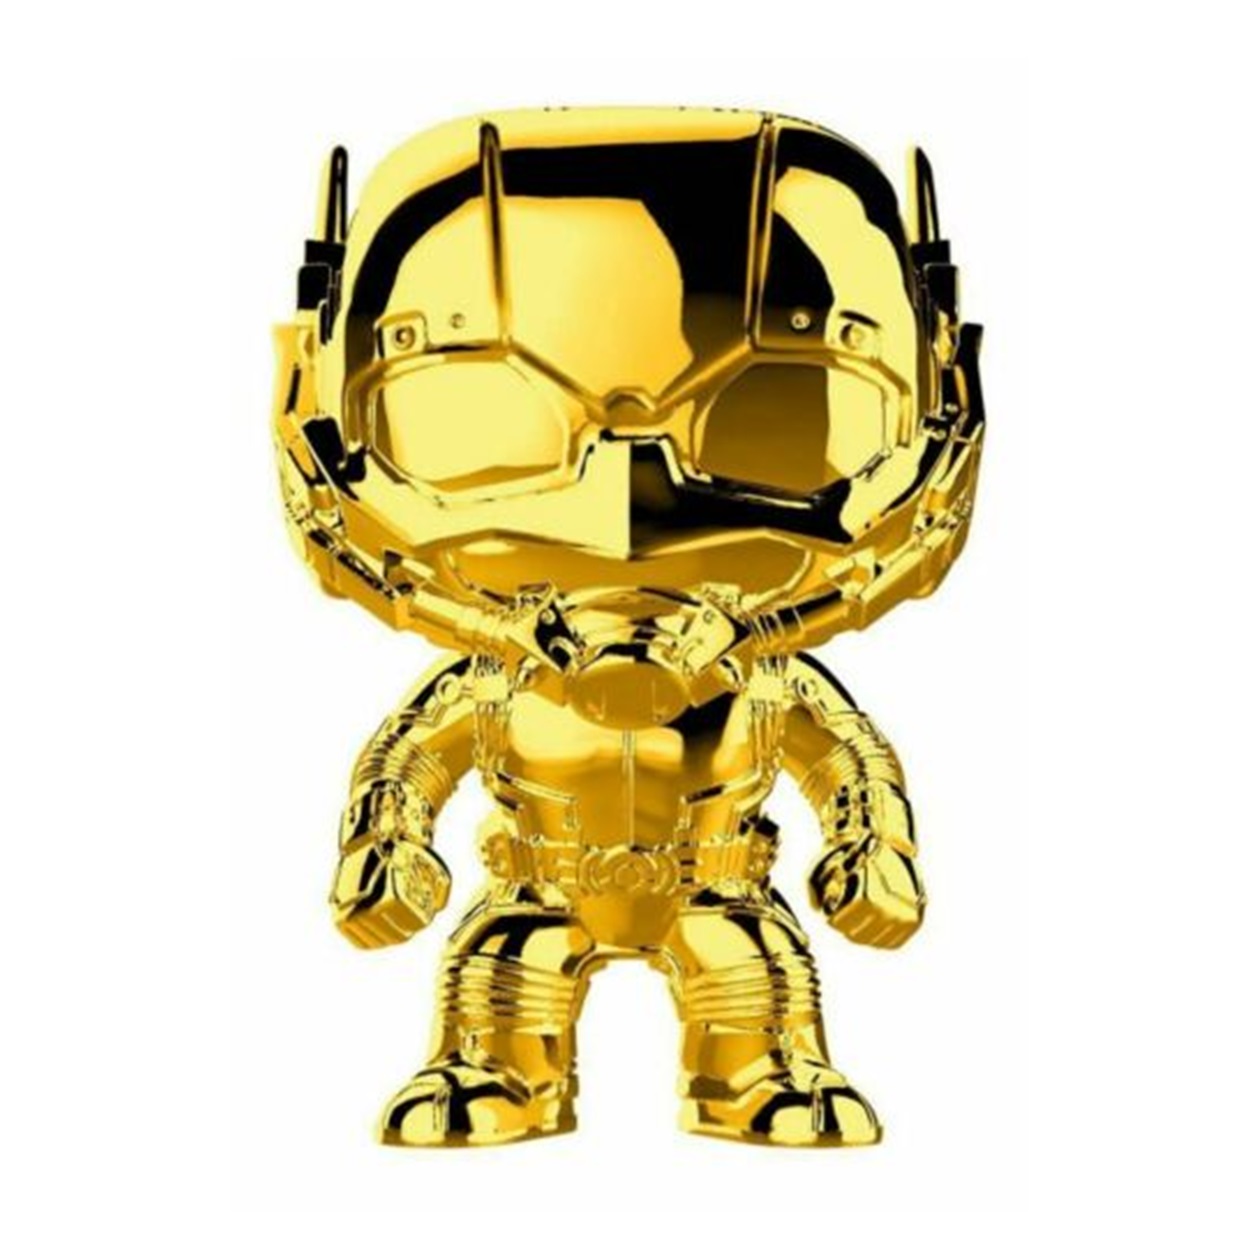 Ant Man #384 Marvel Studios 10th Gold Chrome Funko Pop!